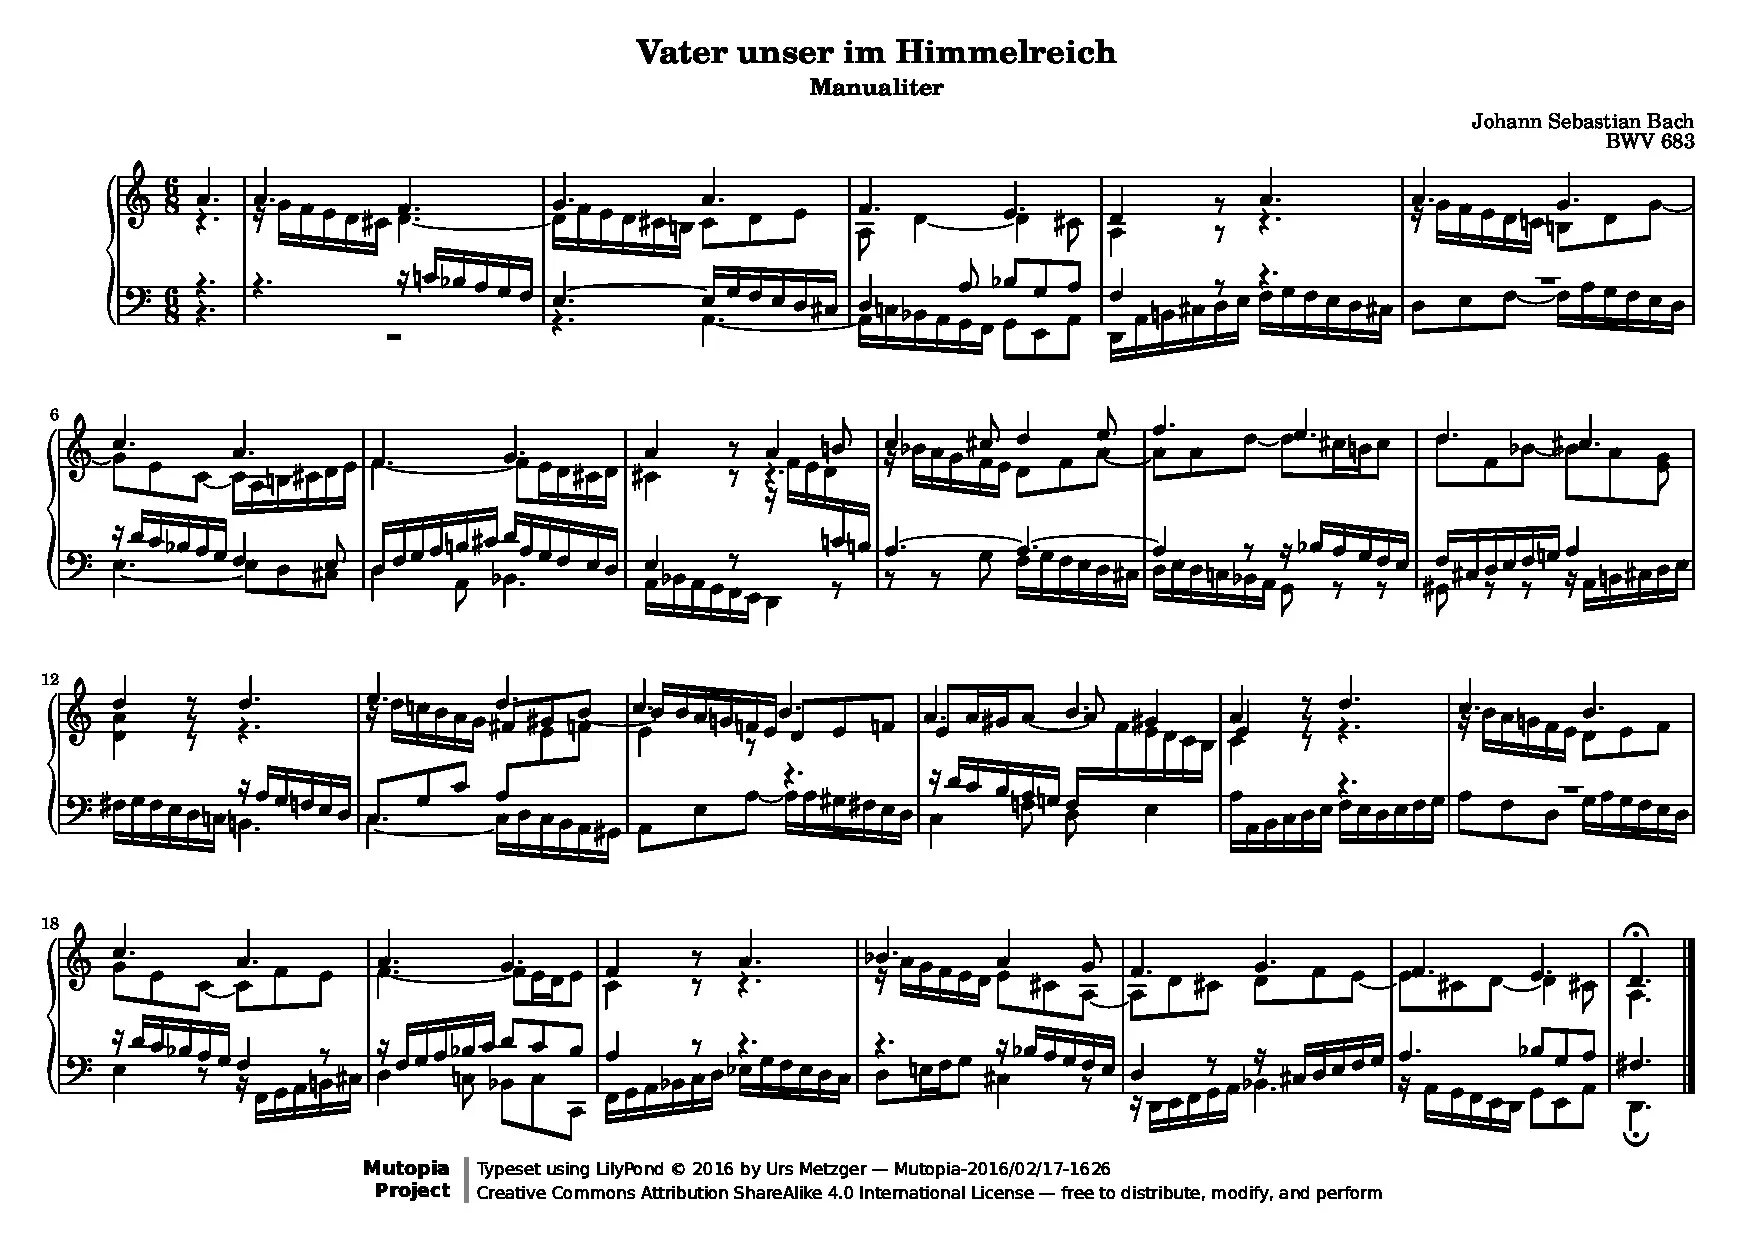 Орган бах прелюдия. Bach Vater unser im Himmelreich 683 Ноты. Бах прелюдия на хорал Vater unser im Himmelreich Ноты для фортепиано BWV 683. Бах прелюдия на хорал Vater unser im Himmelreich Ноты для фортепиано. I.S. Bach with Family.